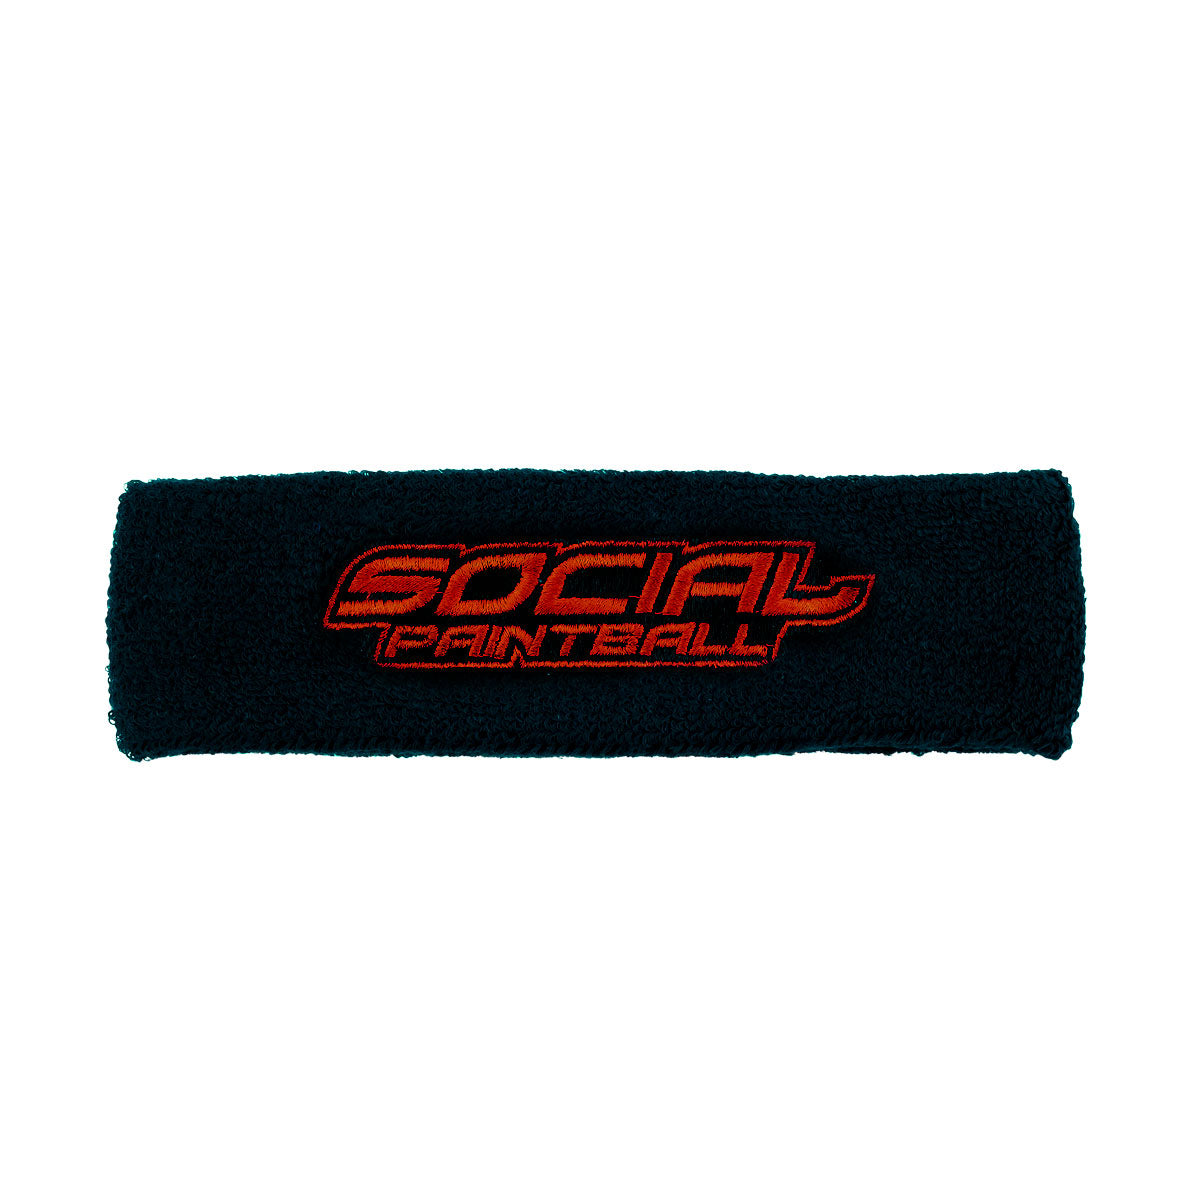 Sweatband, Black | Paintball Headband | Social Paintball